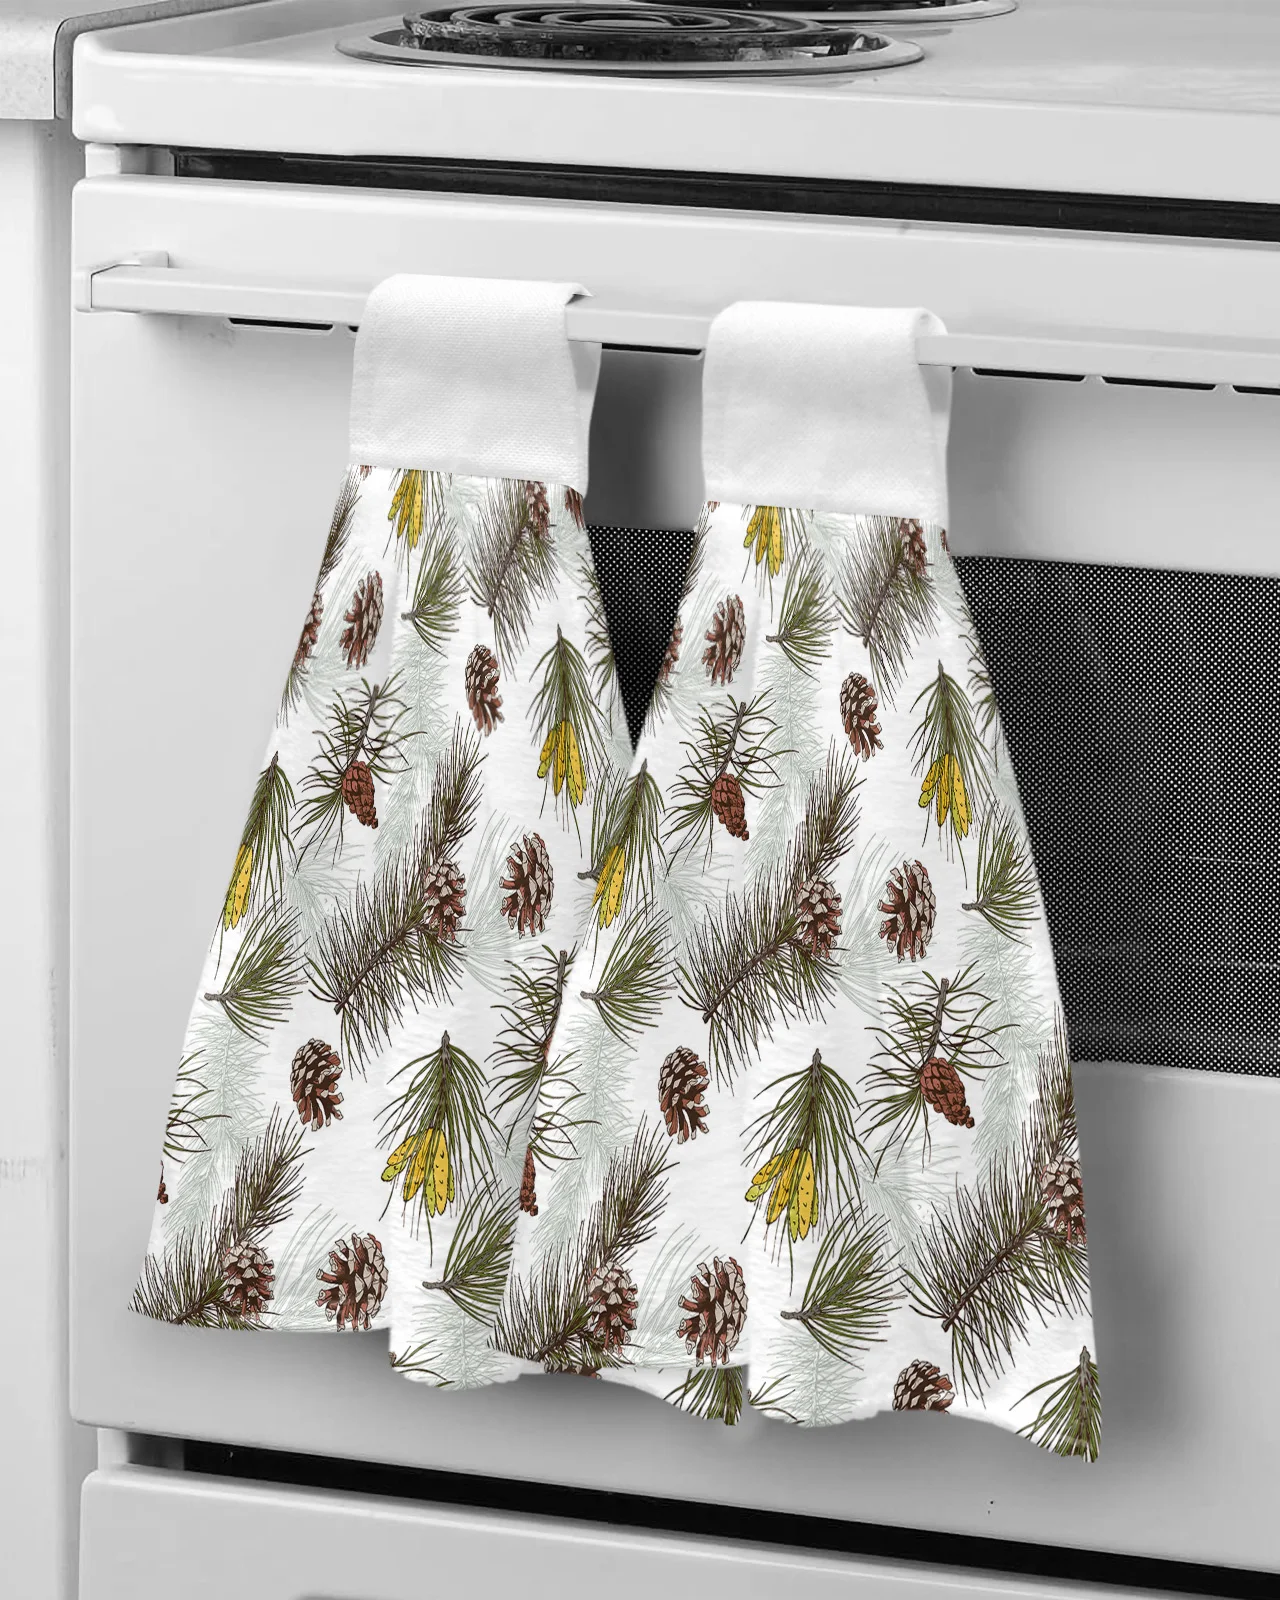 

Pine Cone Merry Christmas Hand Towels Microfiber Bathroom Hanging Towel Absorbent Towels Soft Kids Hand Towels